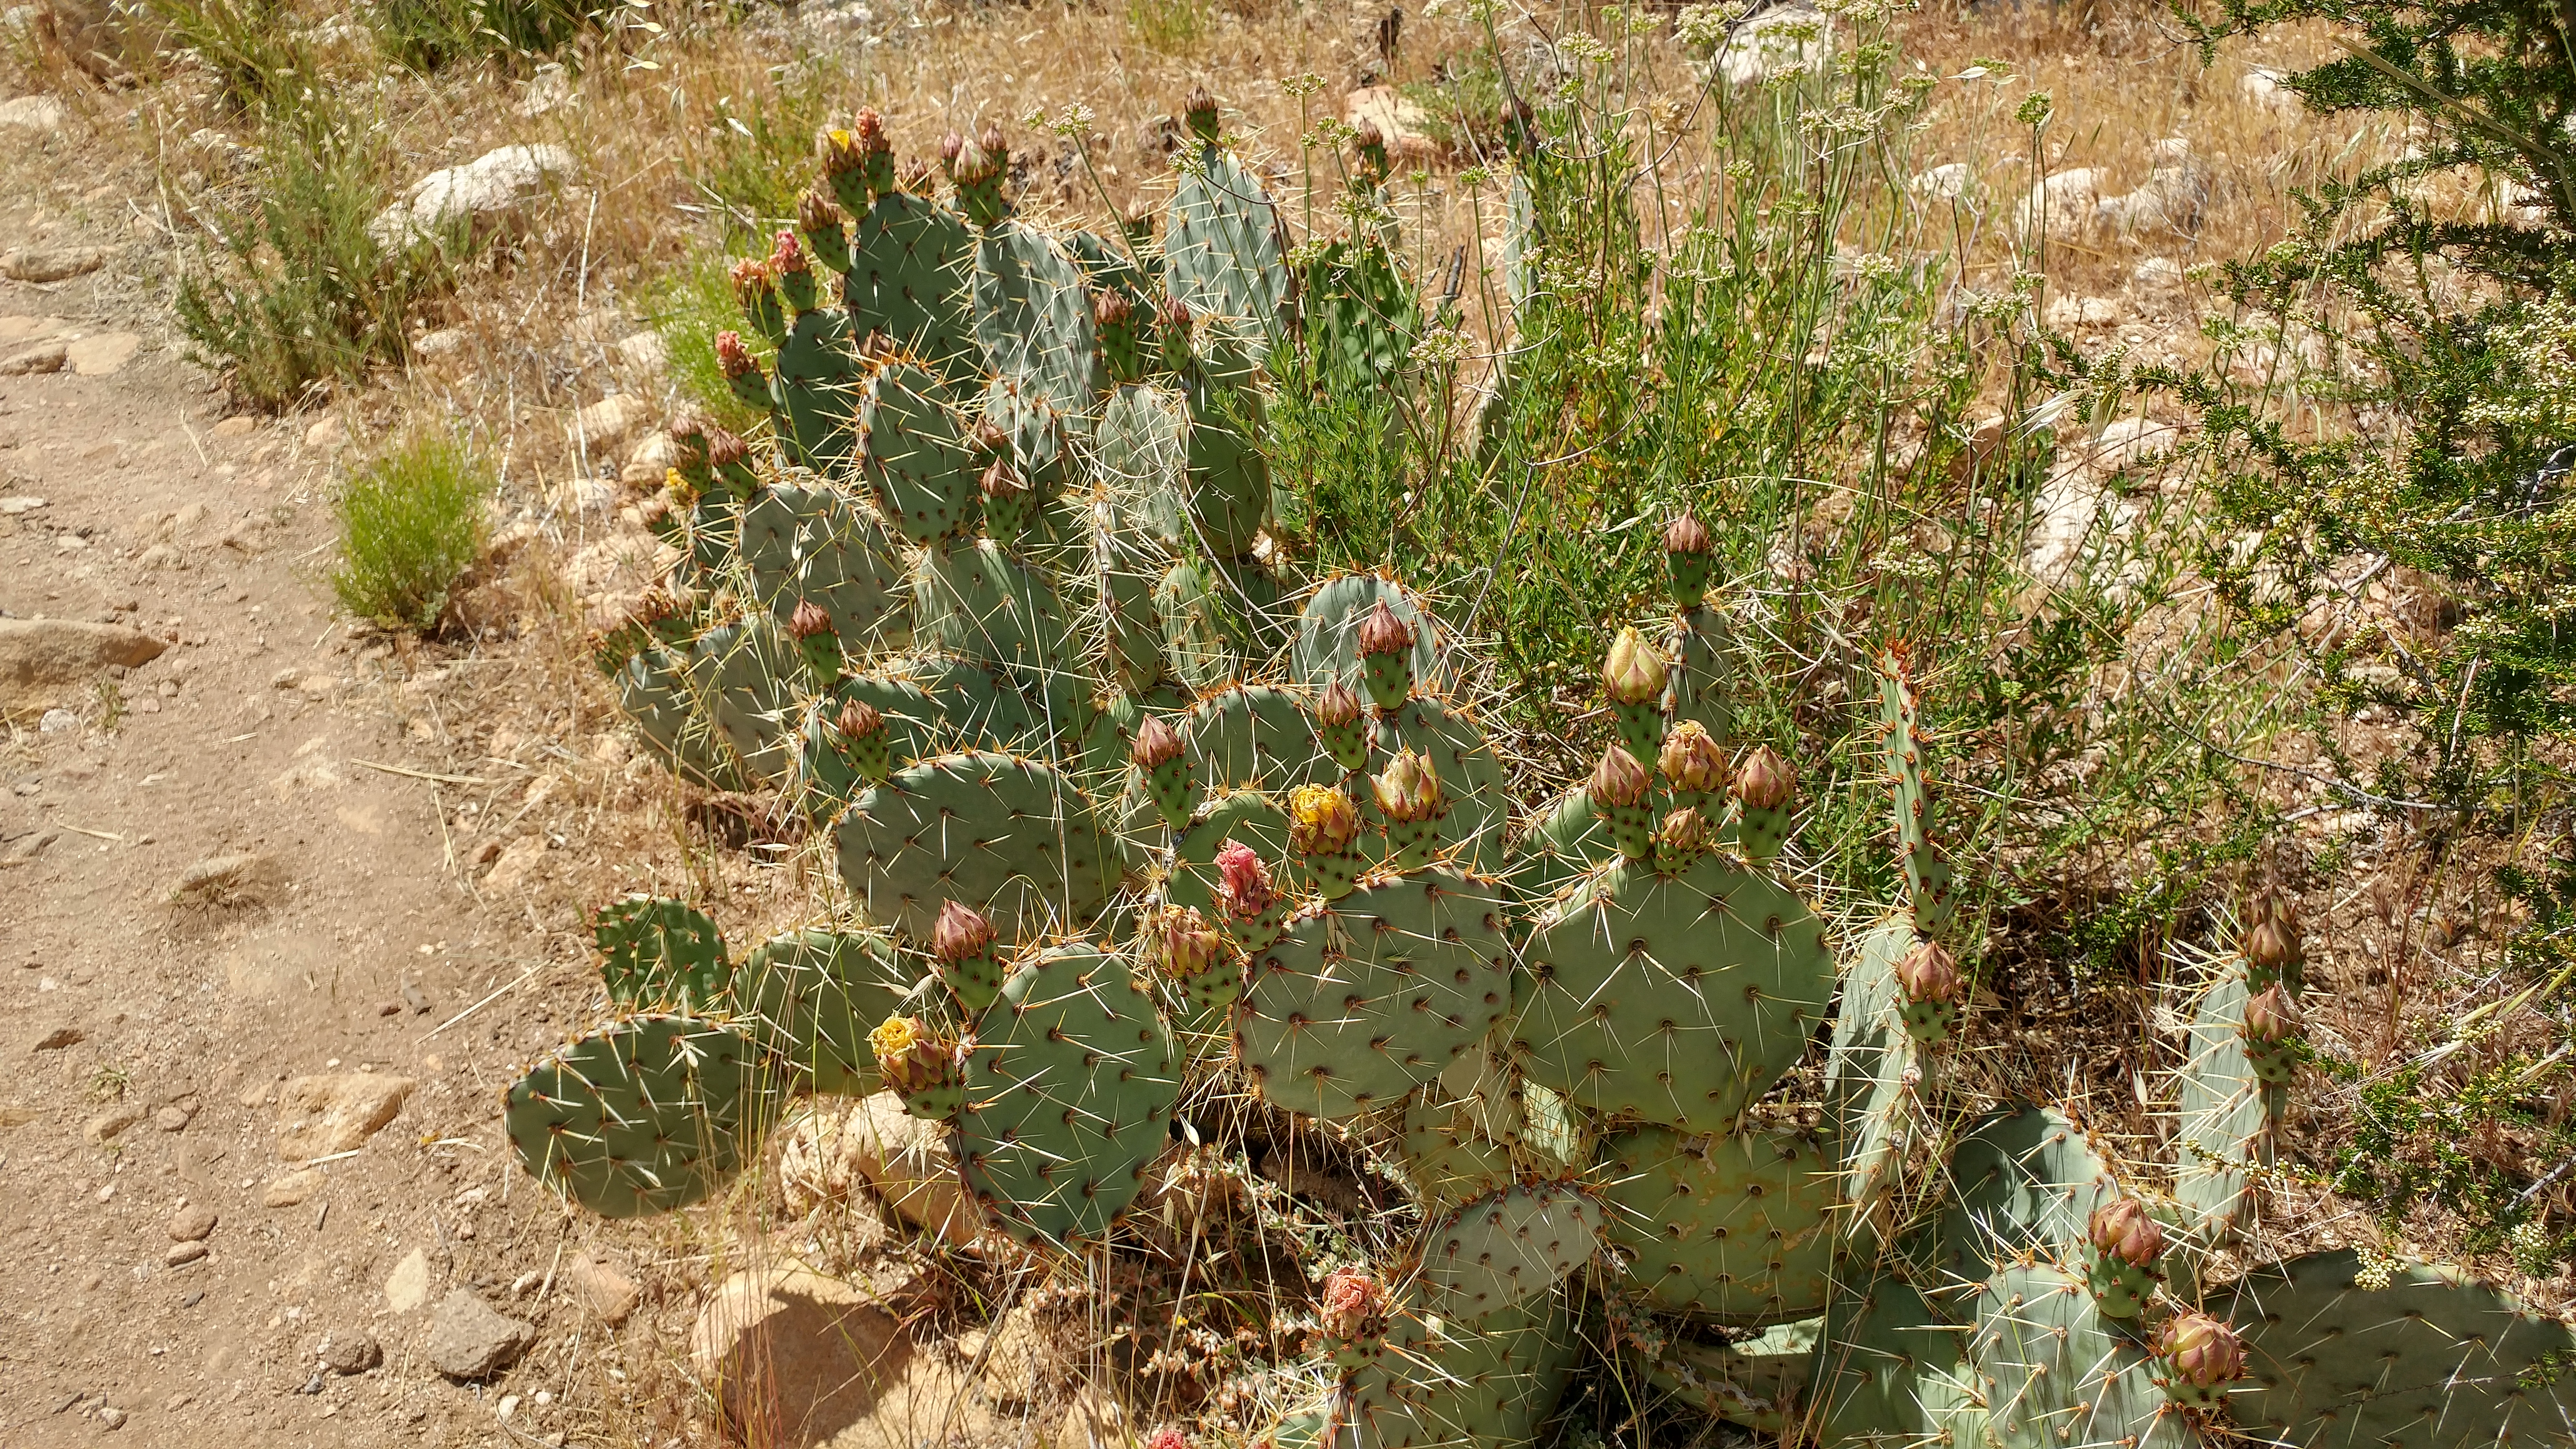 Prickly pear-looking cactus